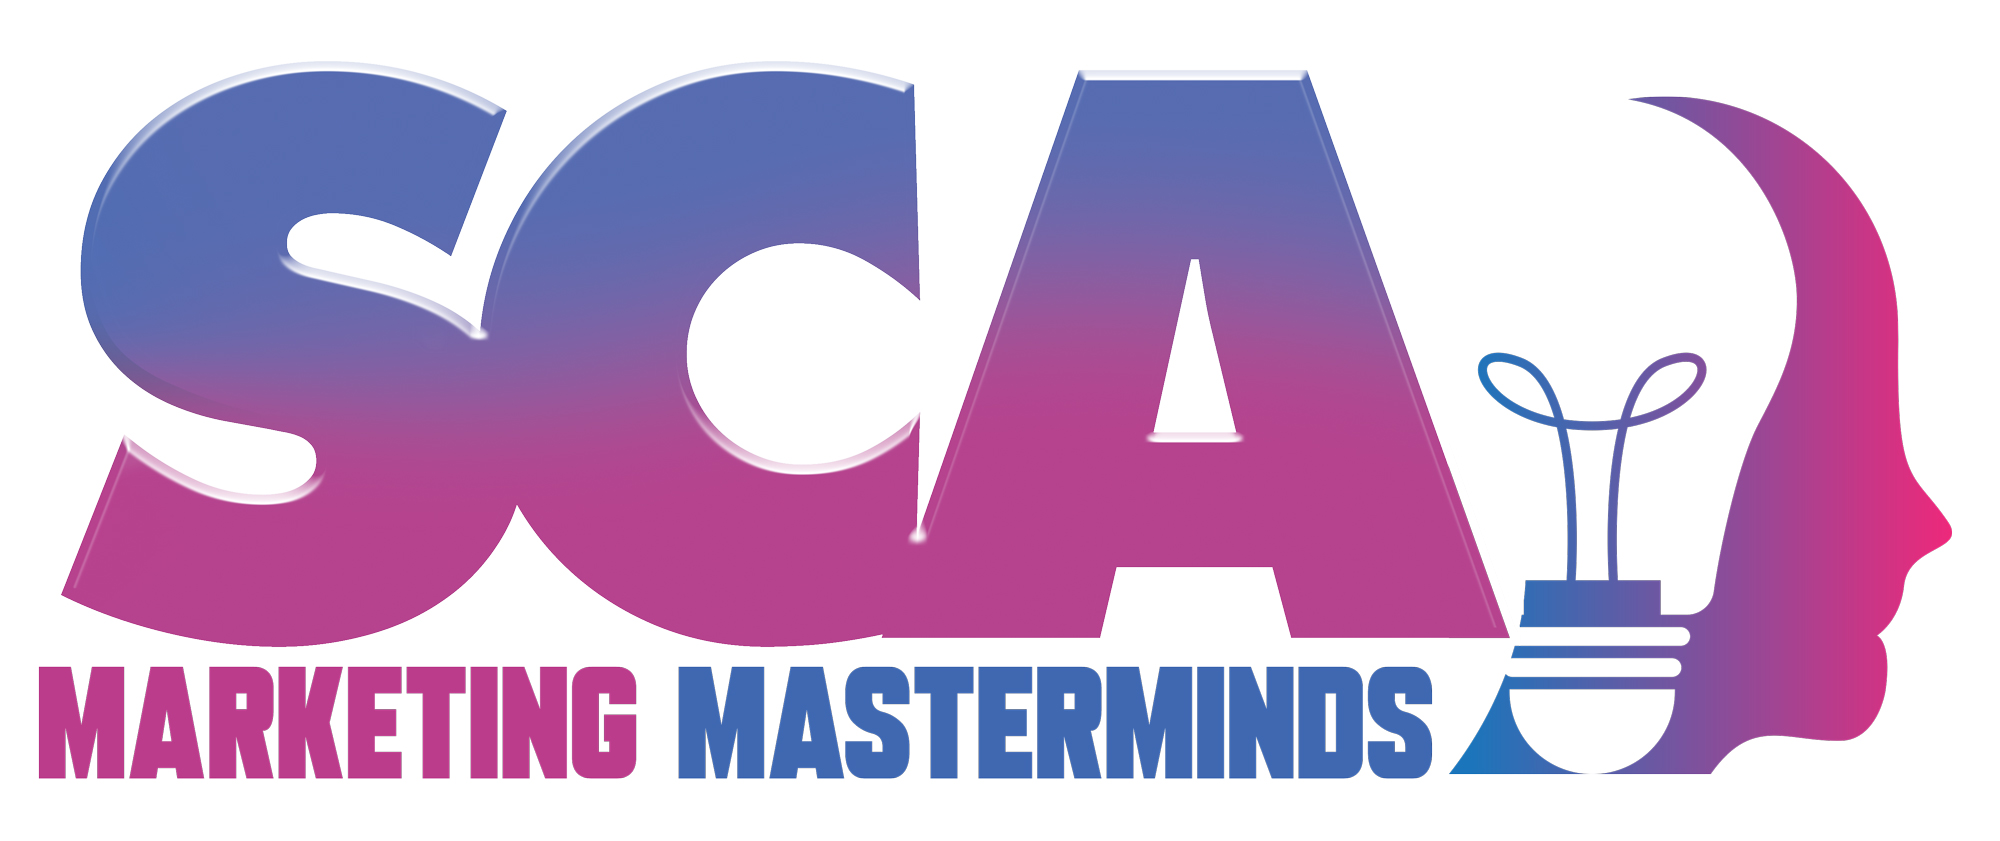 SCA Marketing  Masterminds